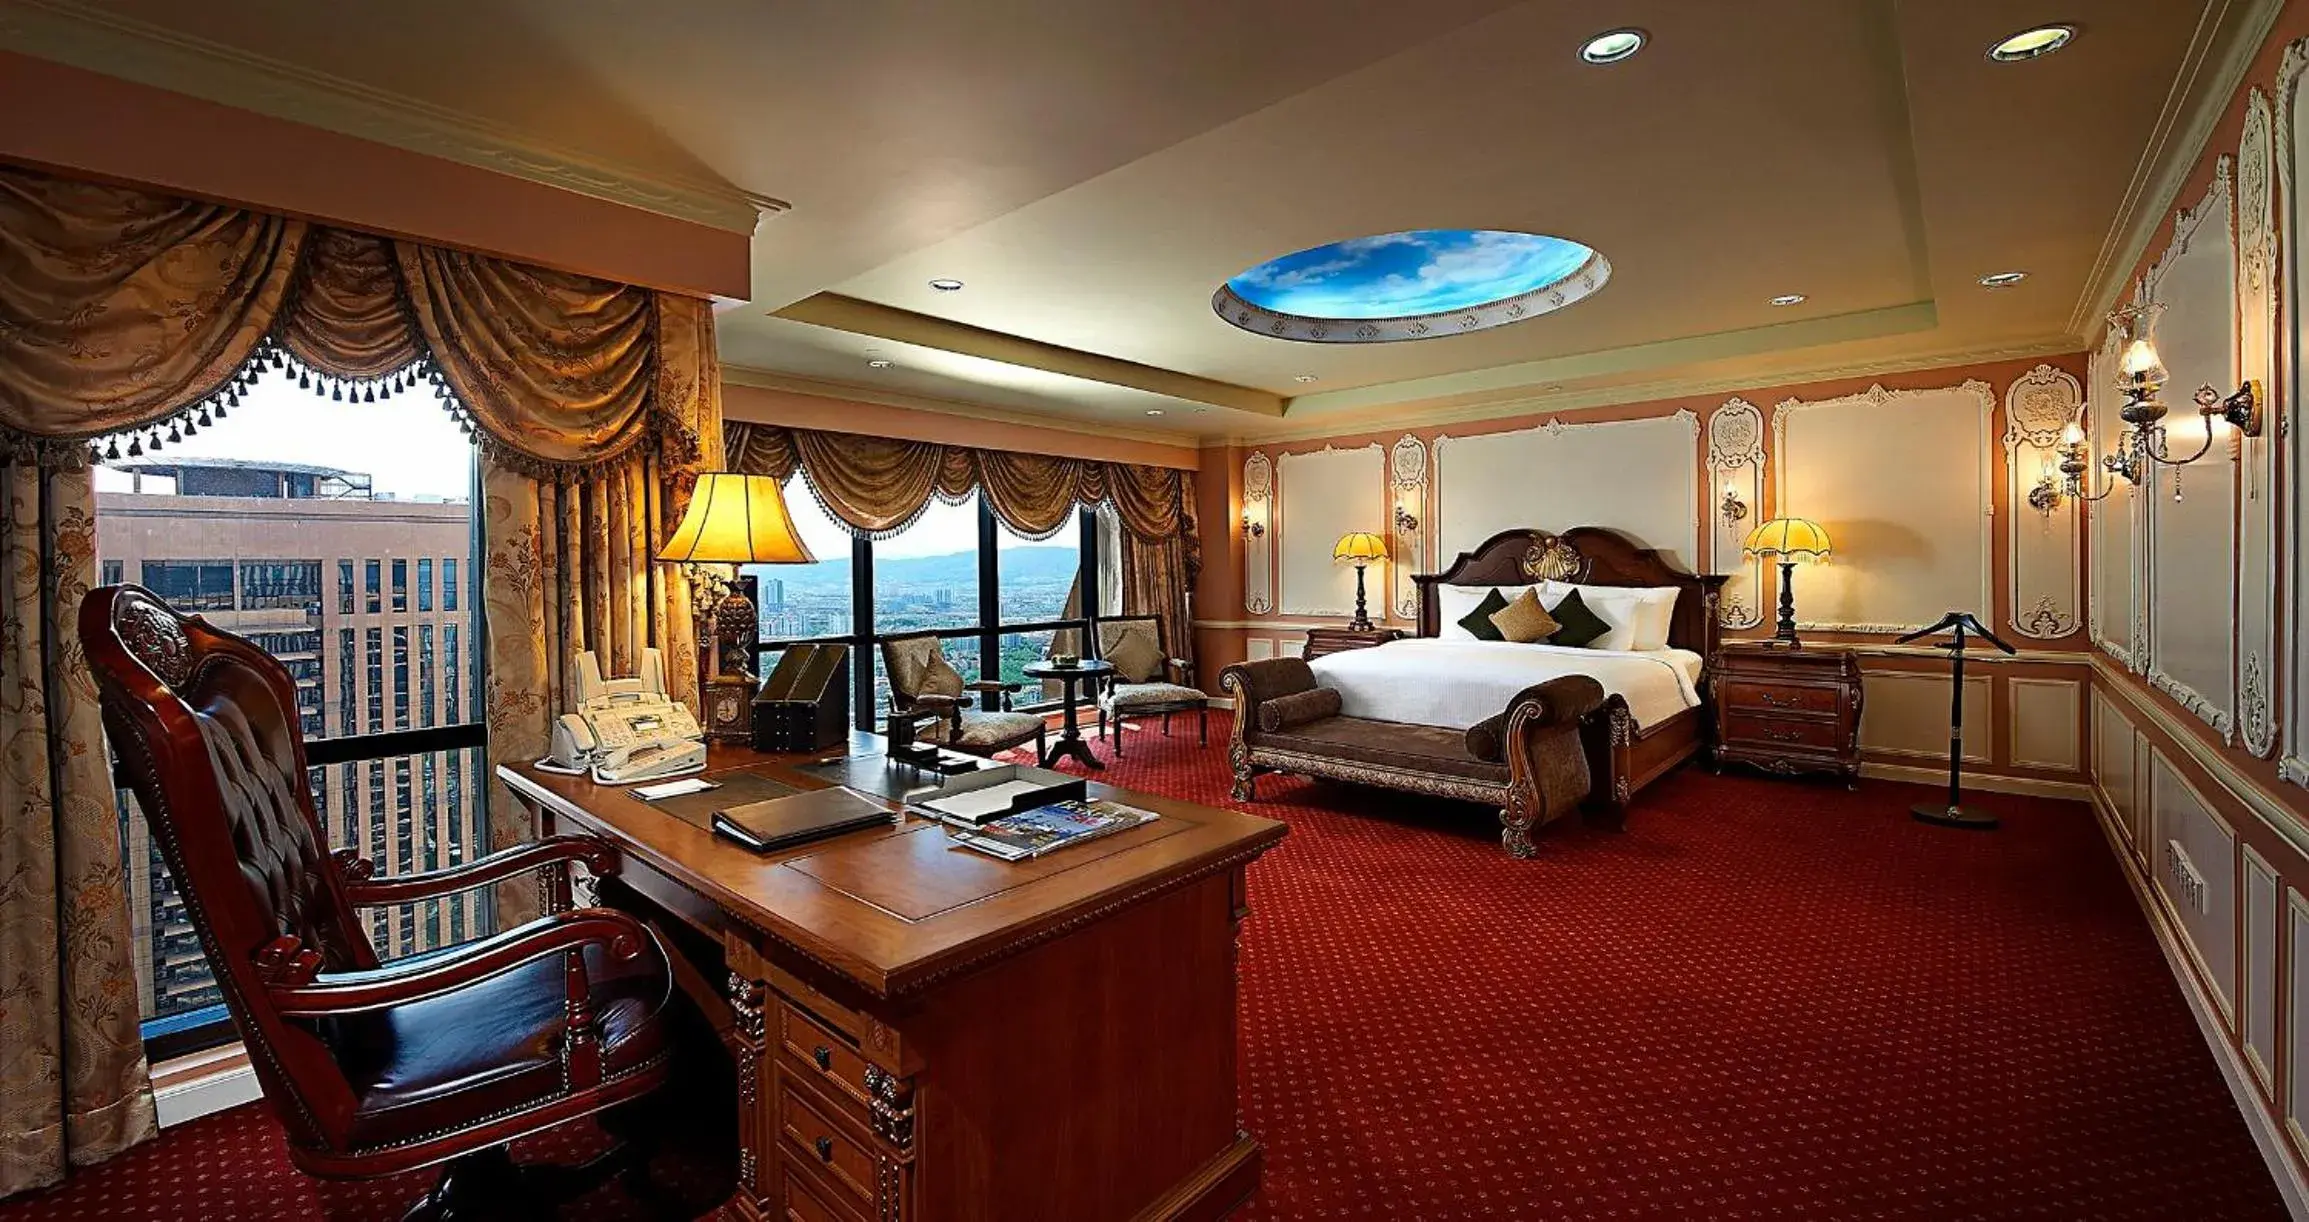 Bedroom in Berjaya Times Square Hotel, Kuala Lumpur